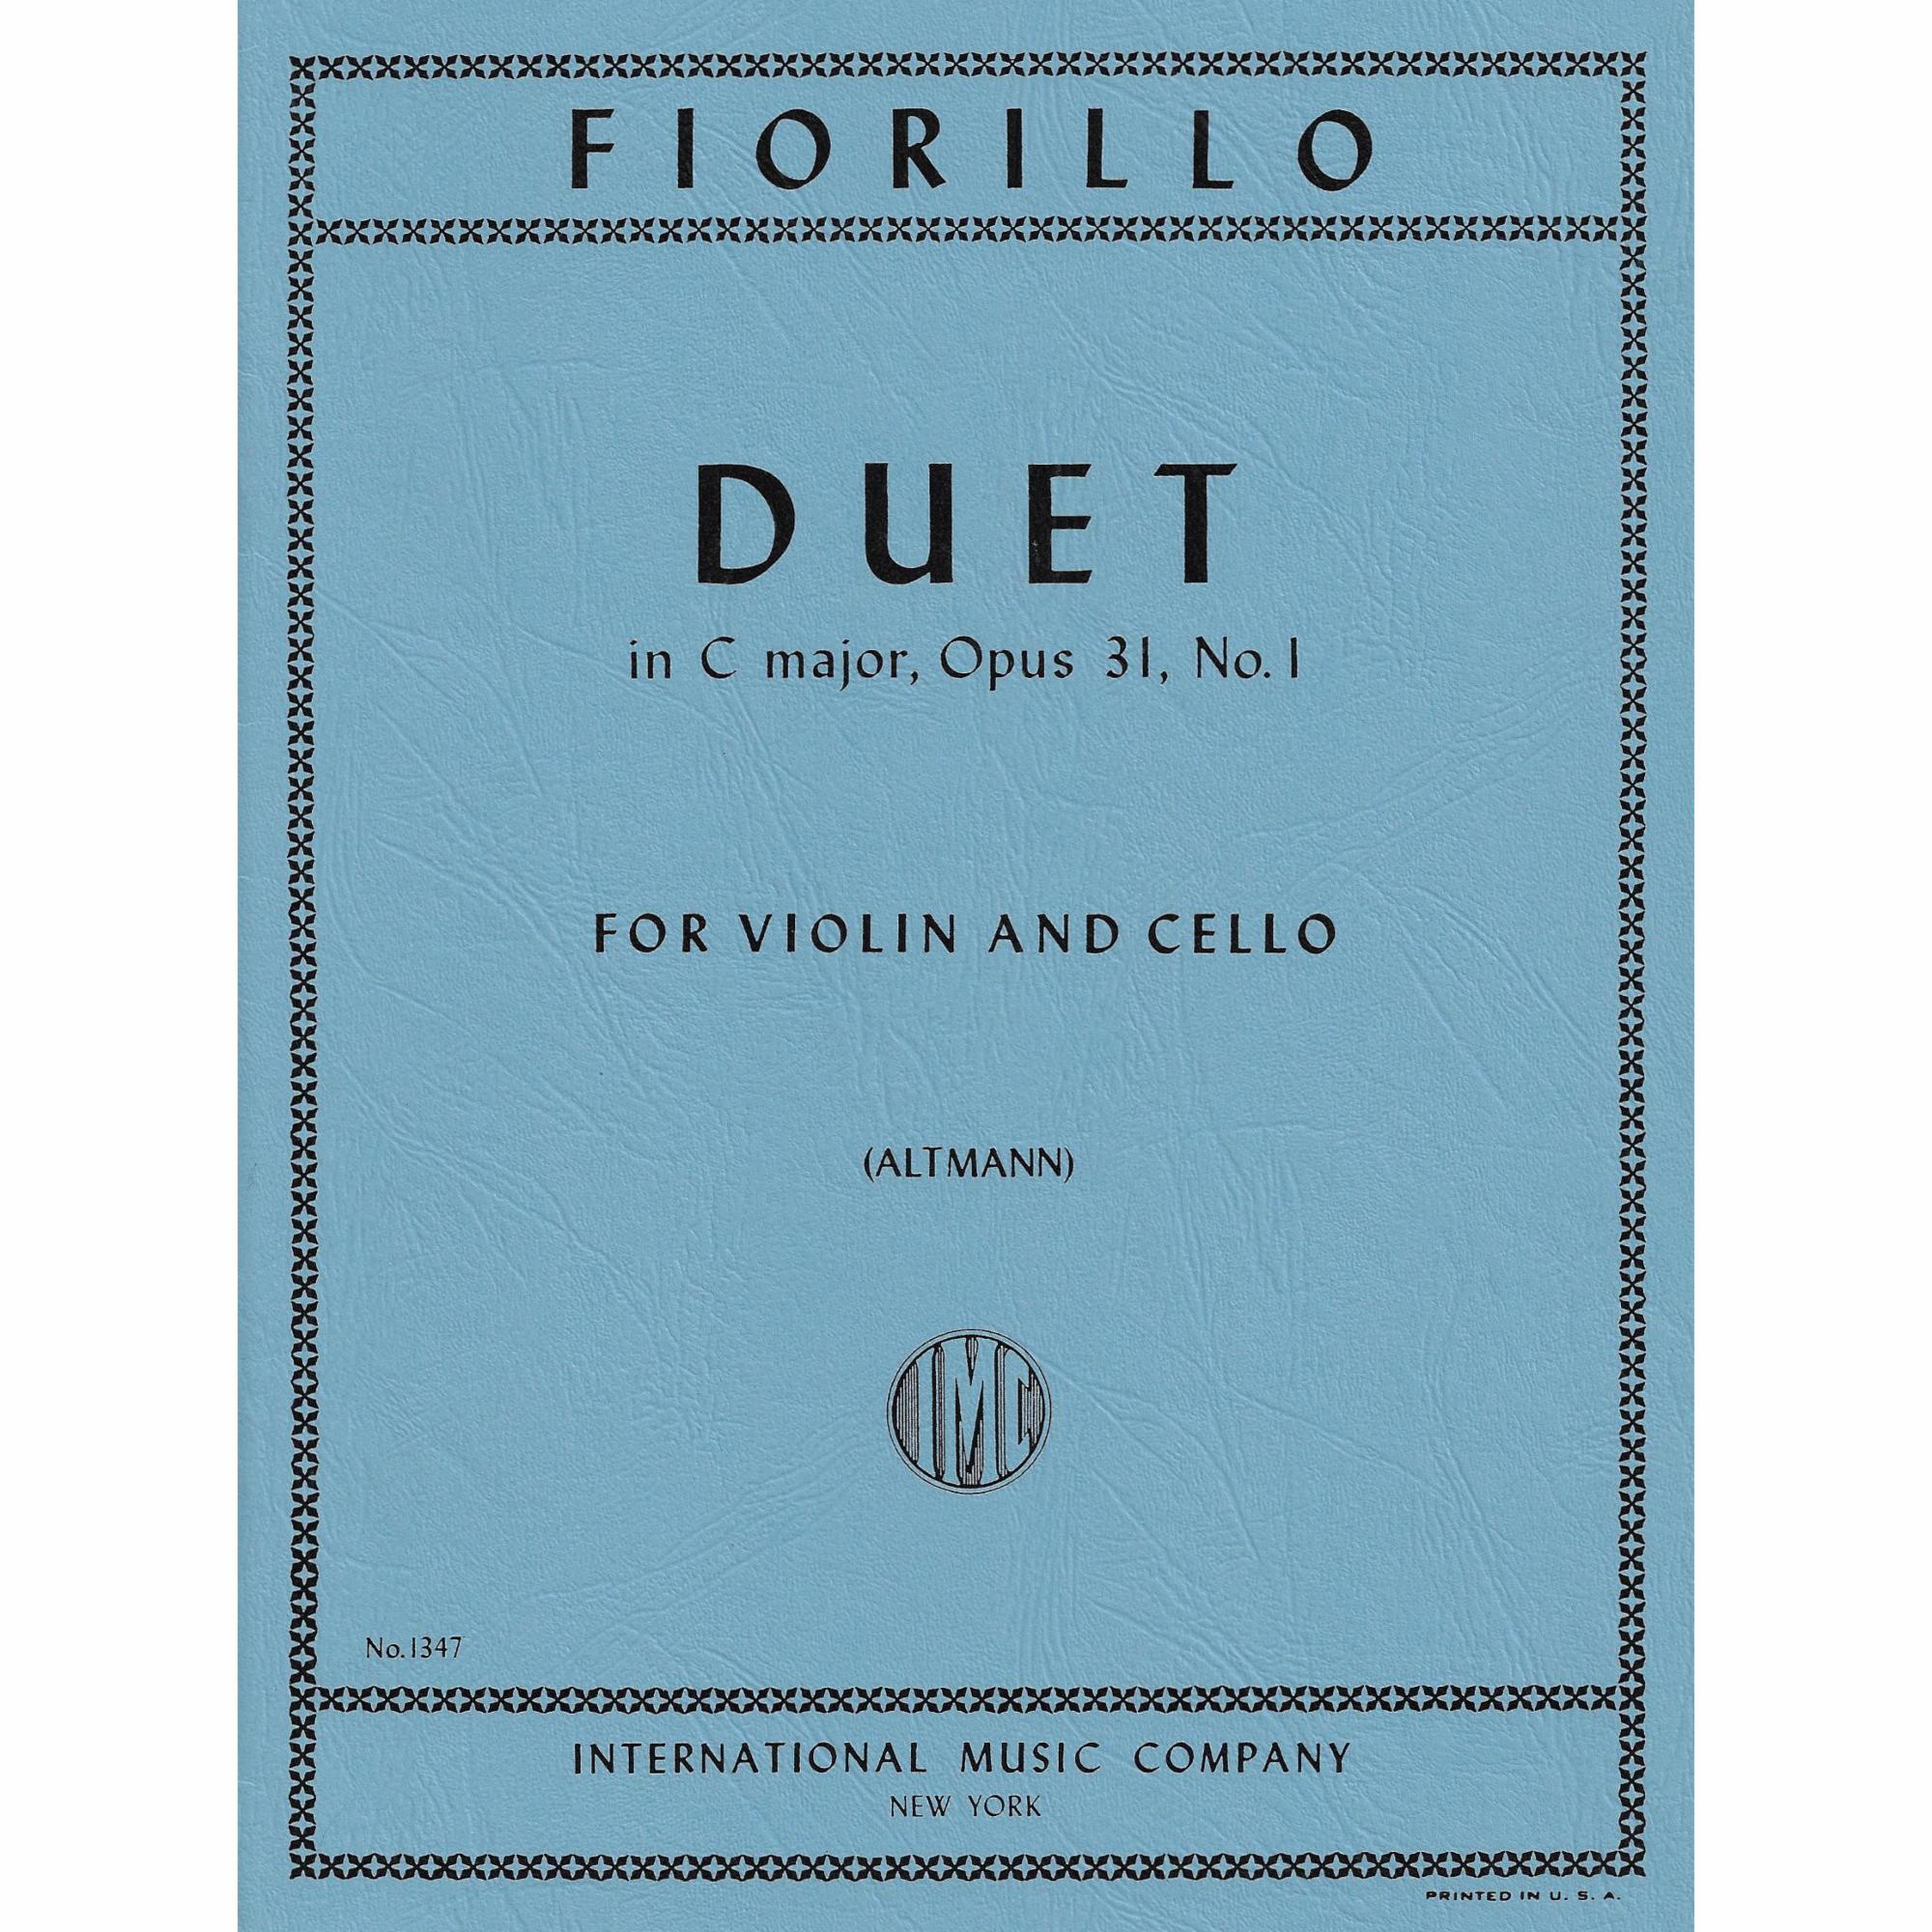 Fiorillo -- Duet in C Major, Op. 31, No. 1 for Violin and Cello